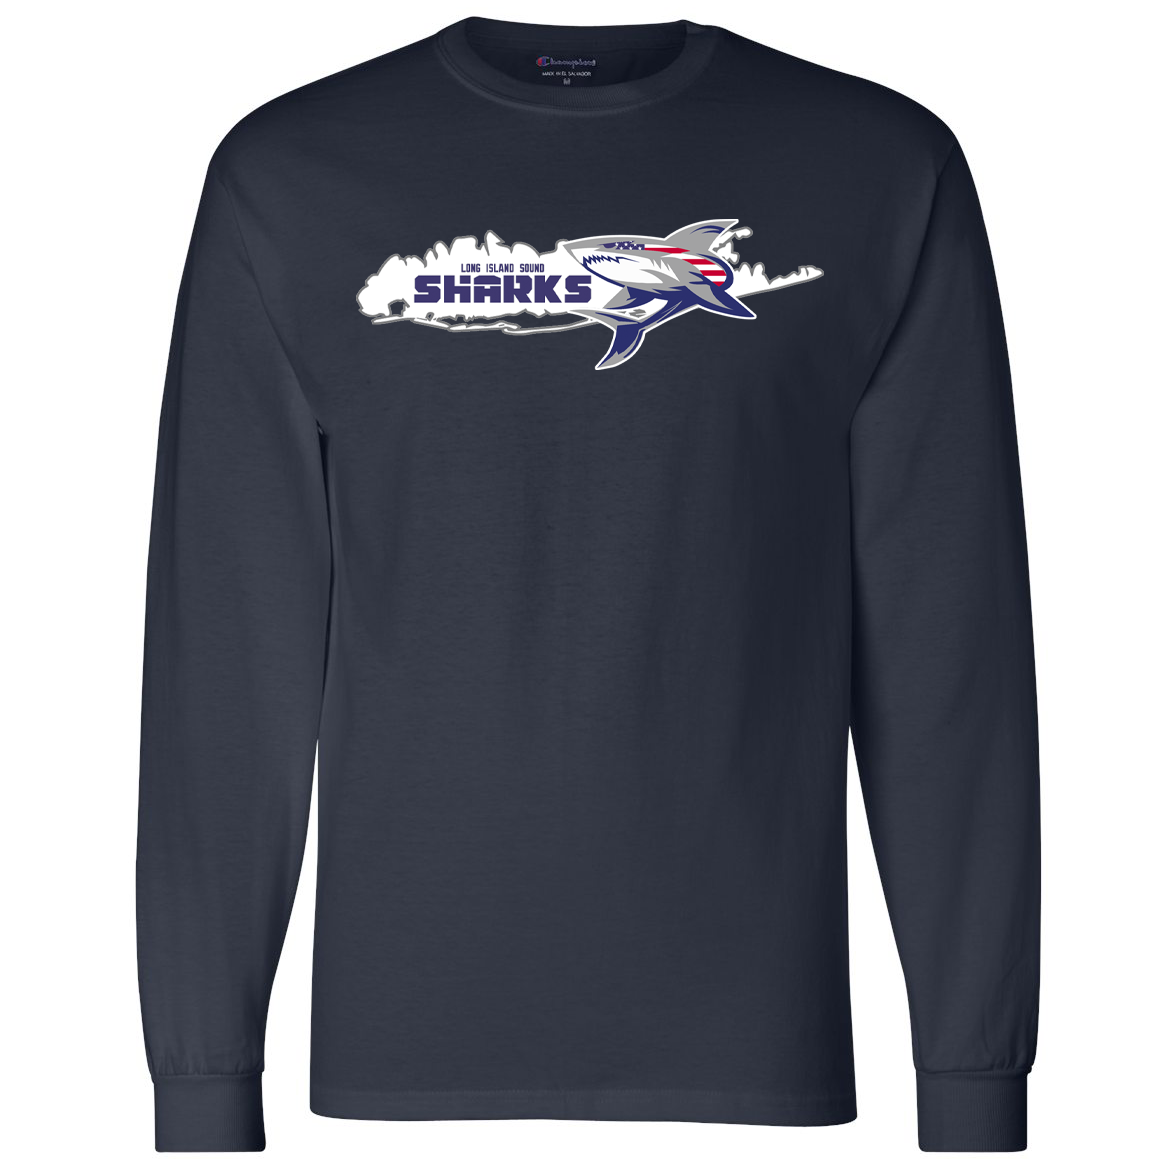 Long Island Sound Sharks Football Champion Long Sleeve T-Shirt